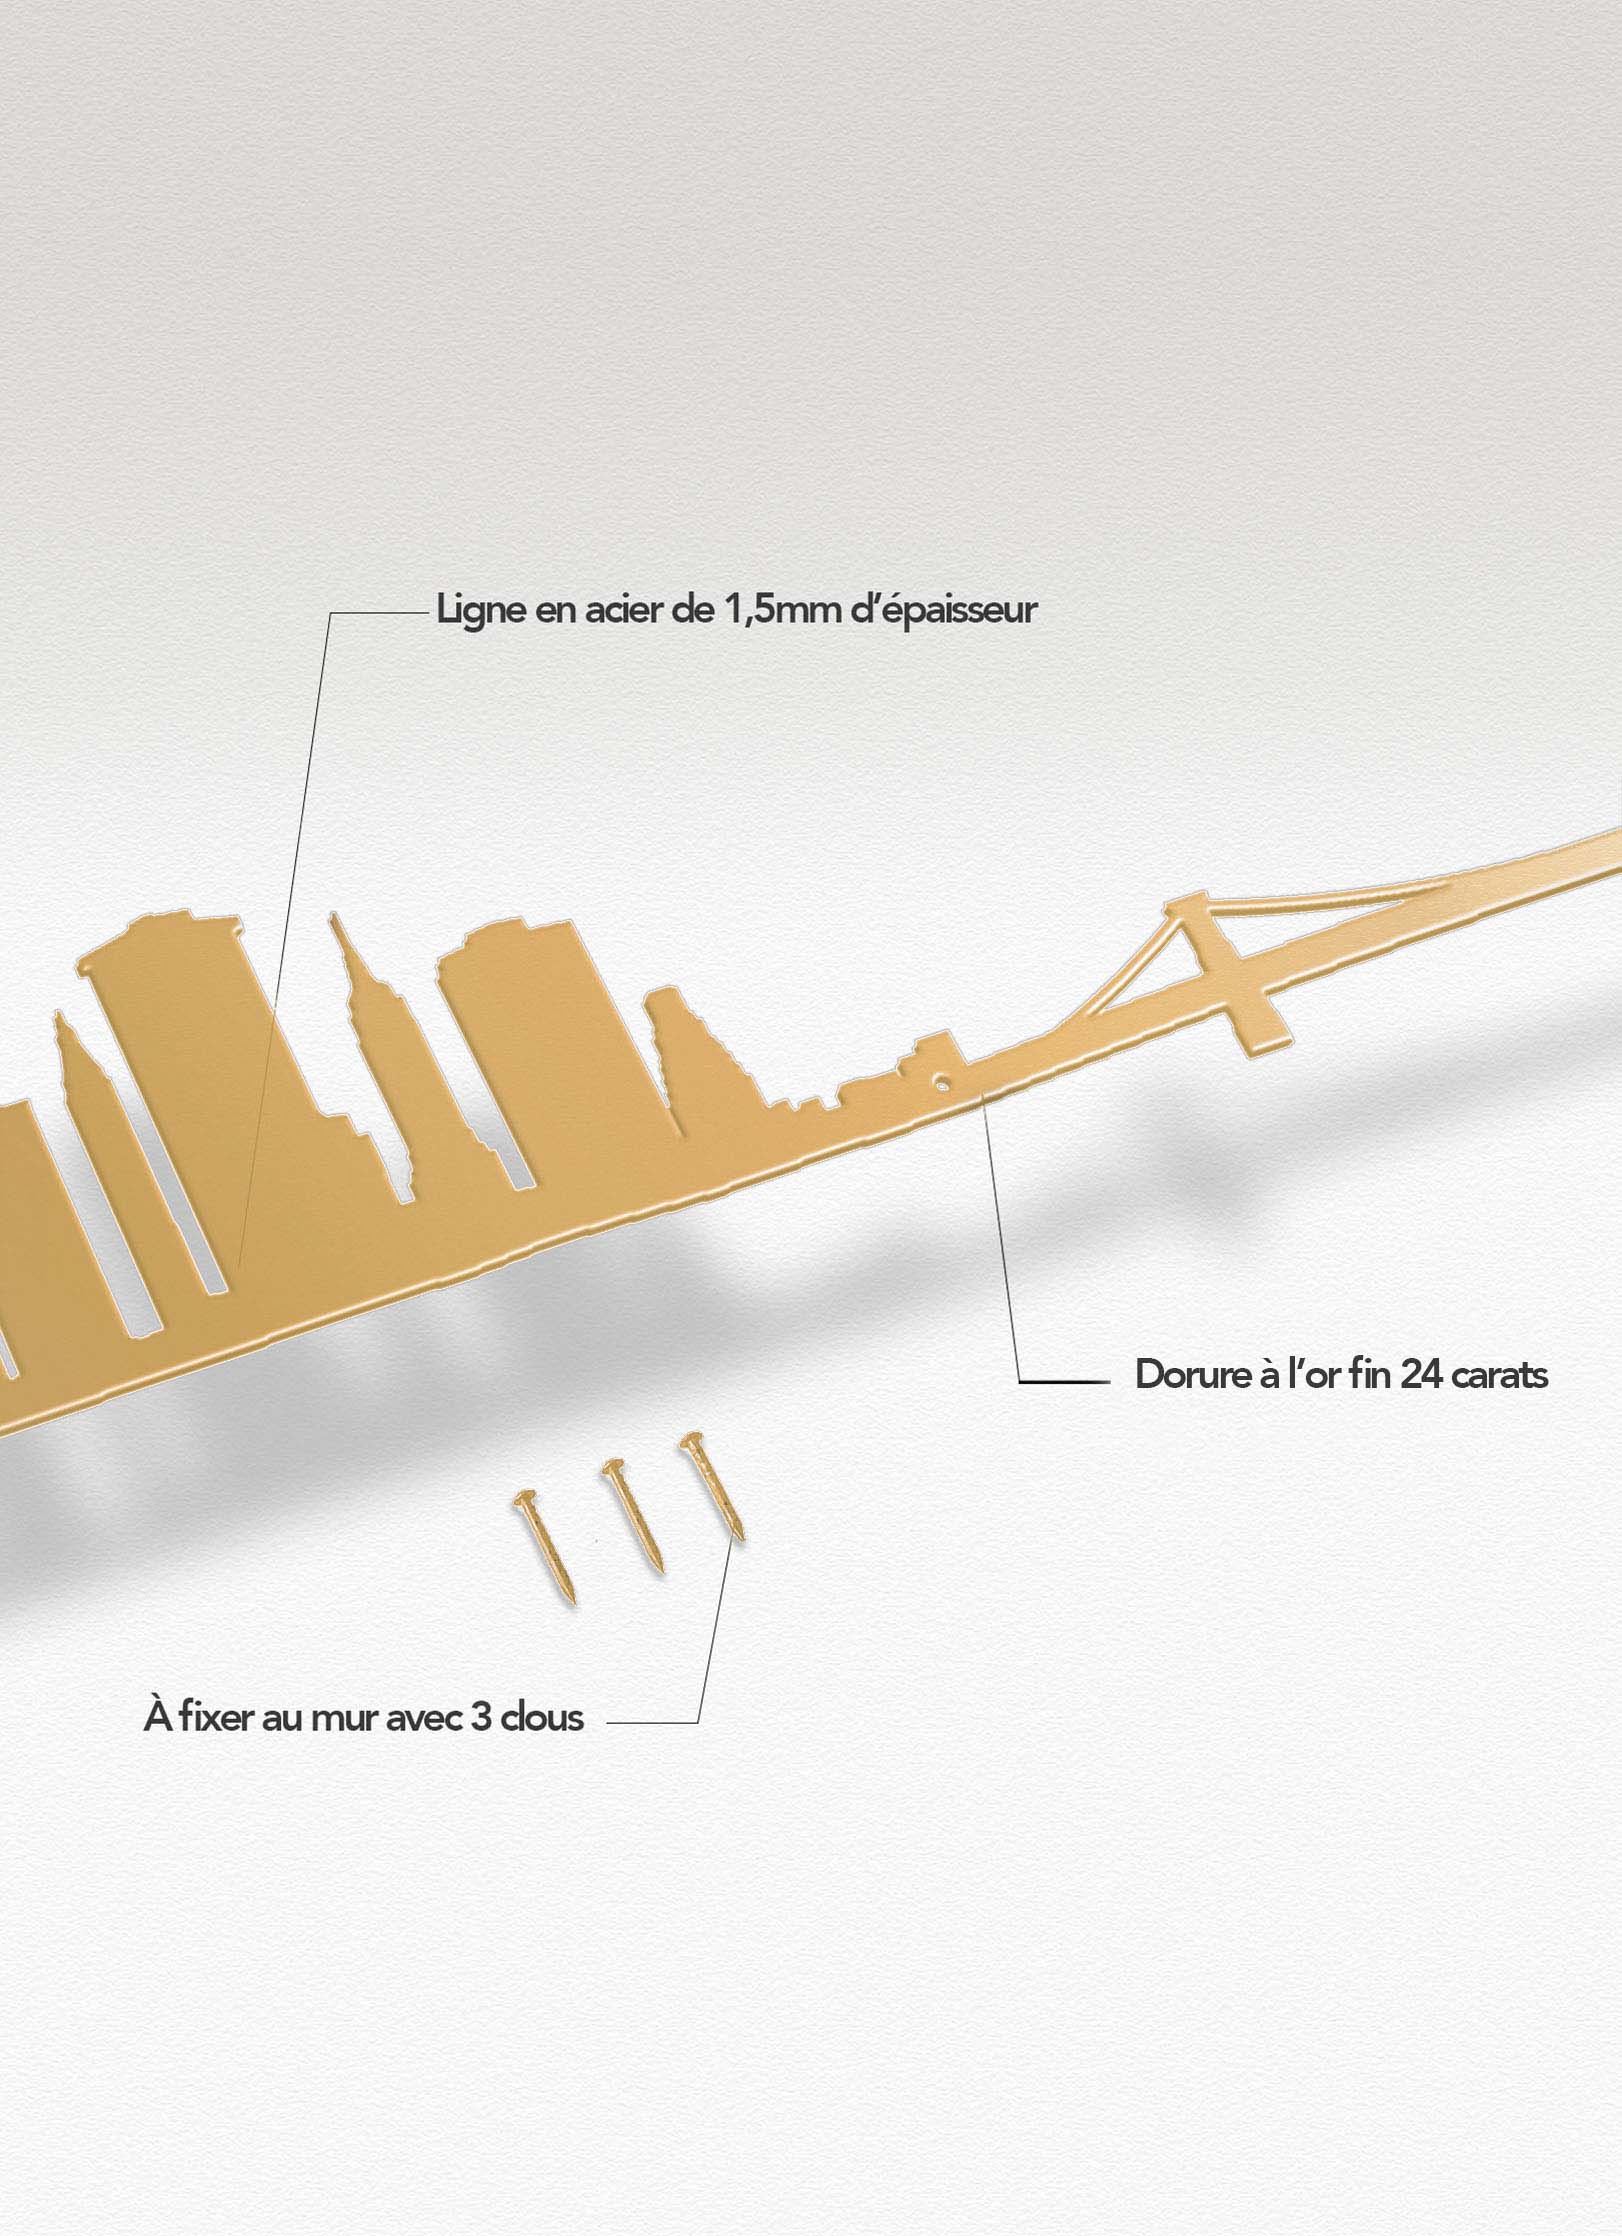 Presentation of the skyline of New York